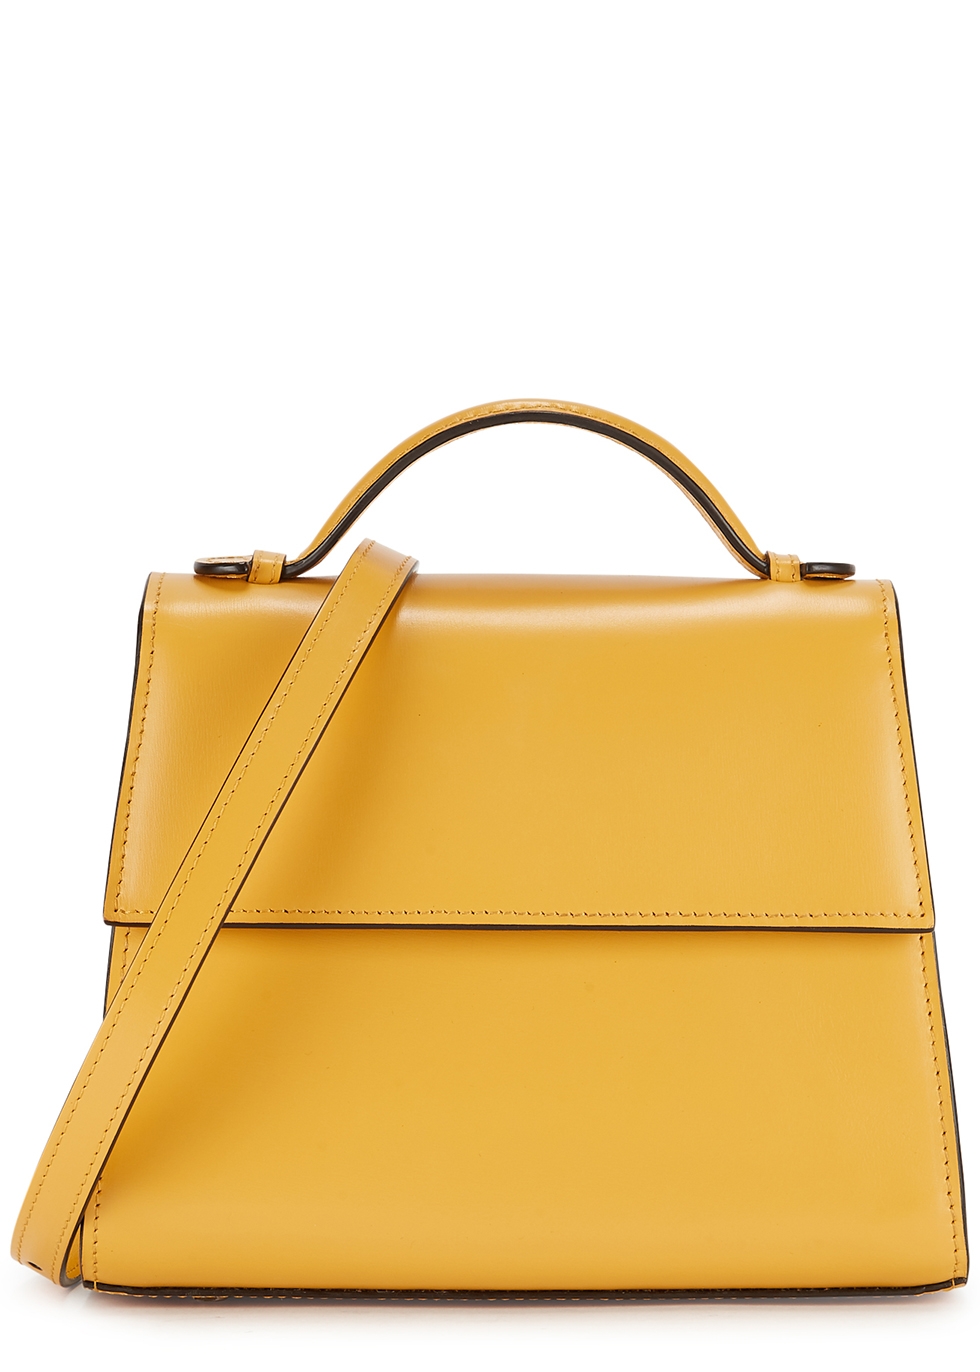 Medium mustard leather top handle bag